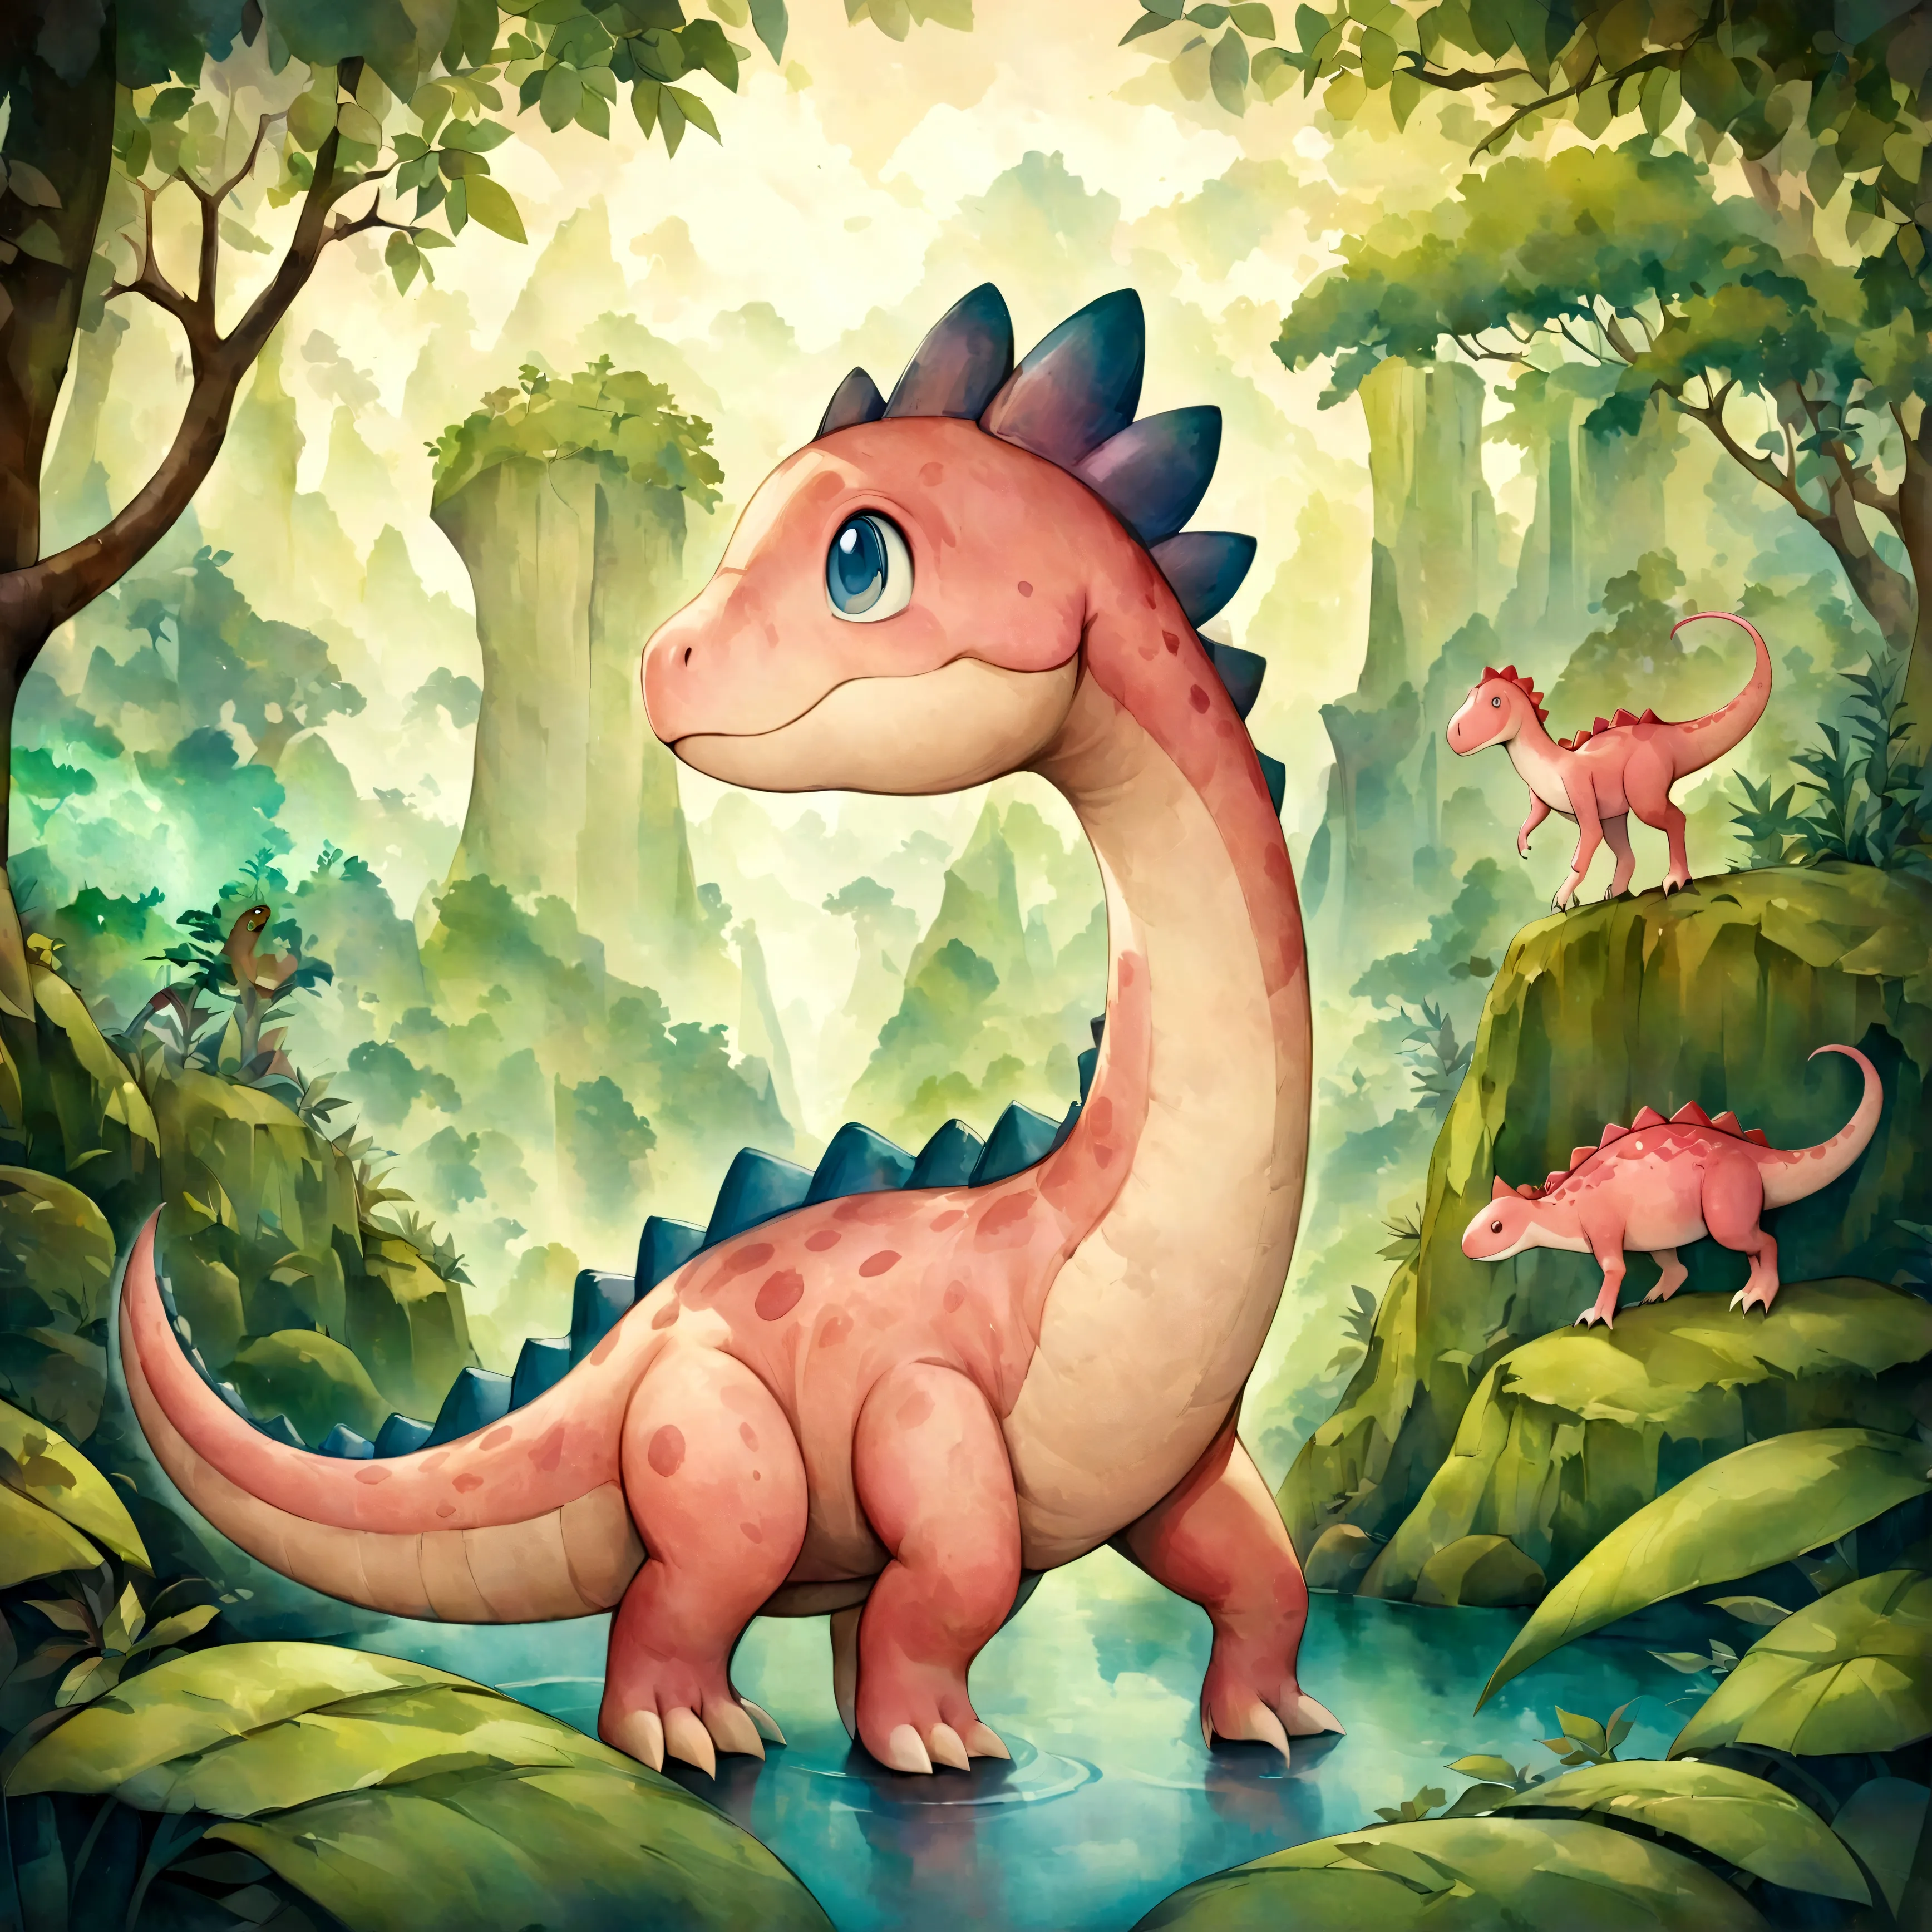 Fixes,An illustration,pink dinosaur,Jurassic background,dinosaur world,Rich in nature,cute illustration,surreal,artwork,Expressi...